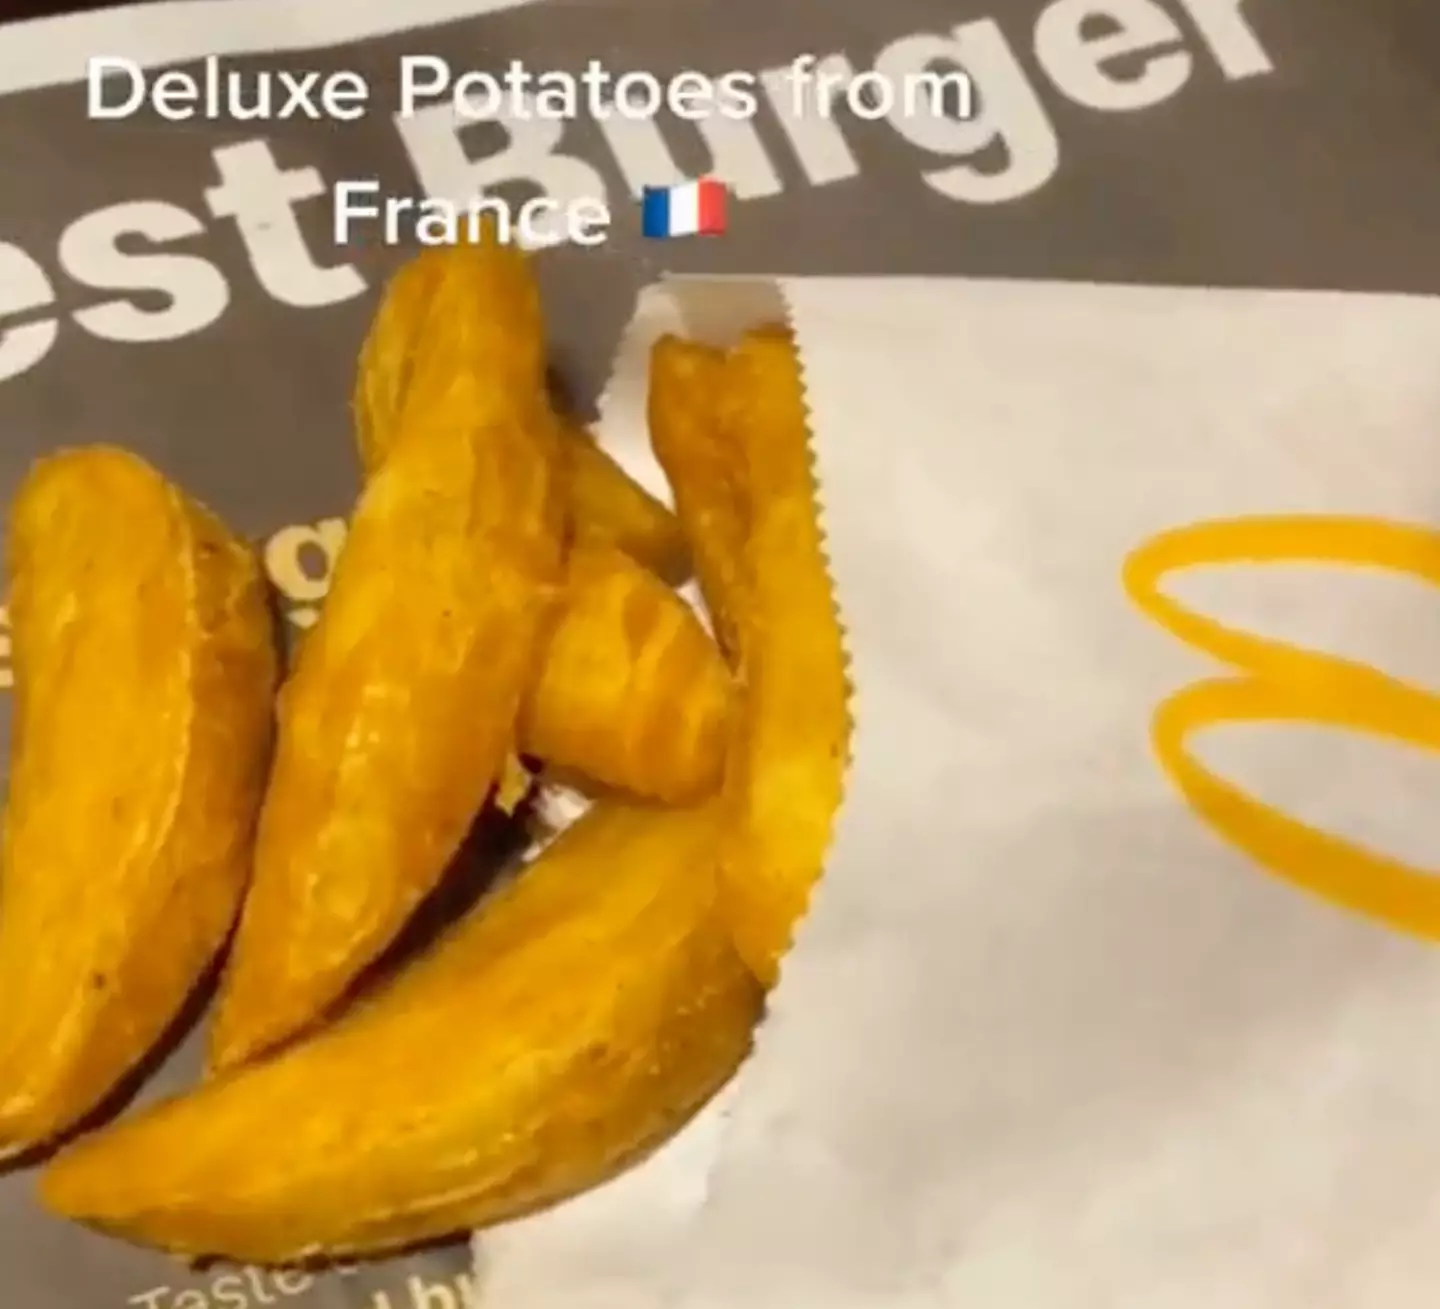 McDonald's in France sells 'Deluxe Potatoes'.